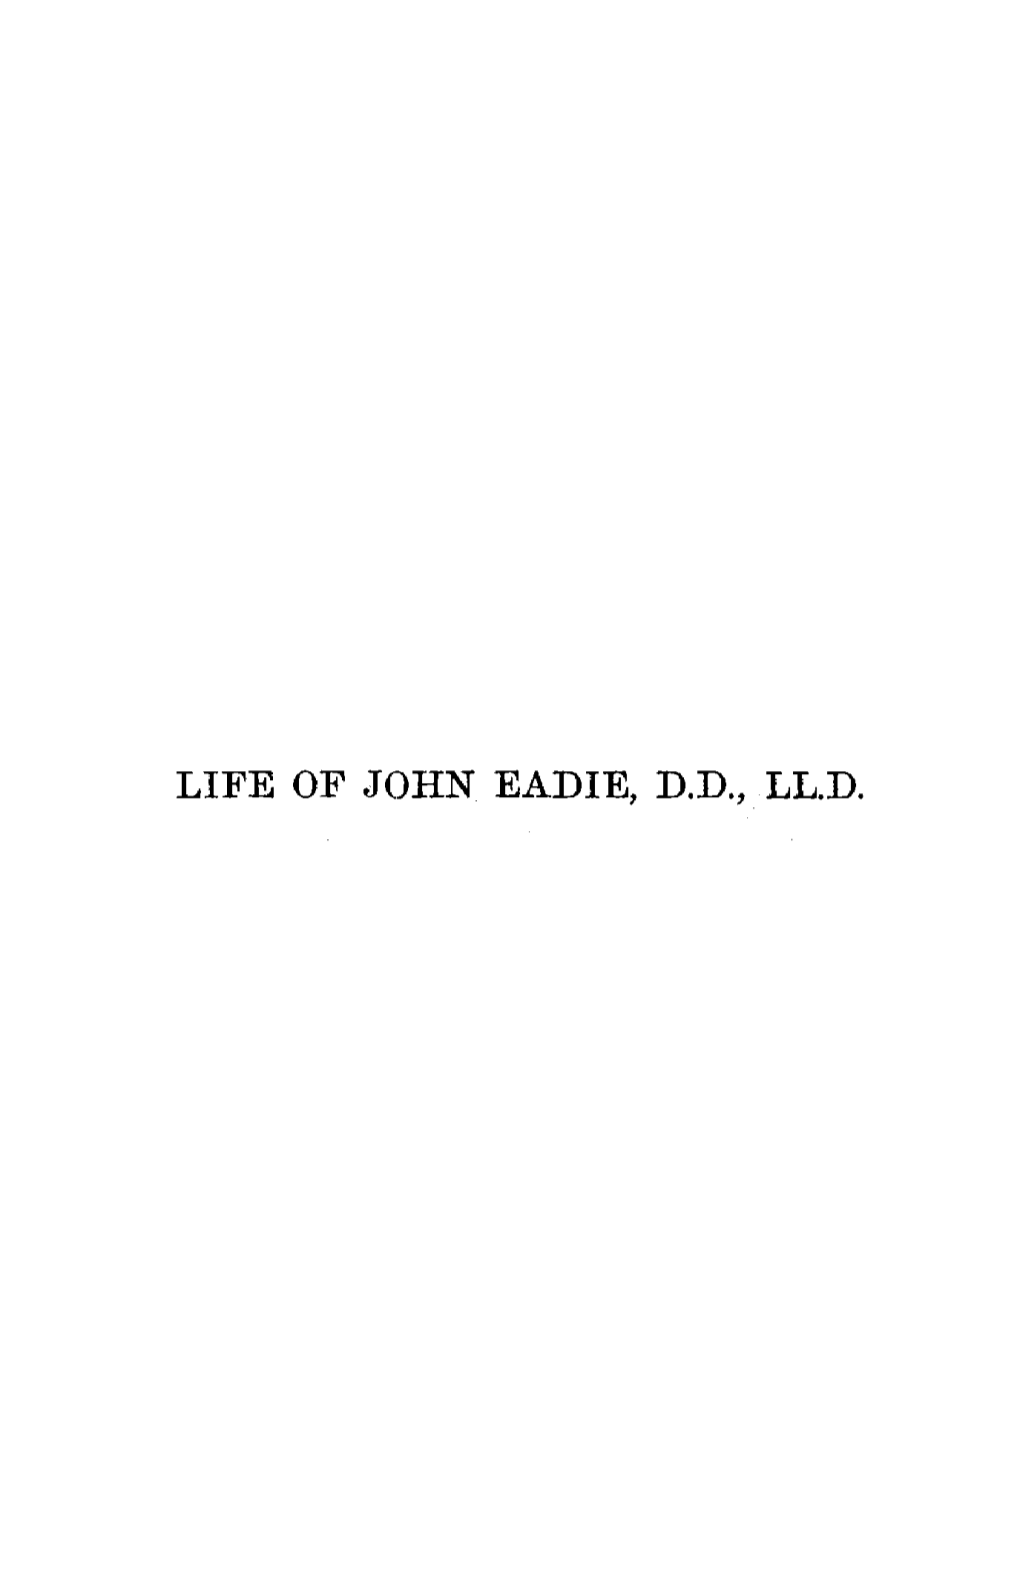 Life of John Eadie, D.D., Ll.D